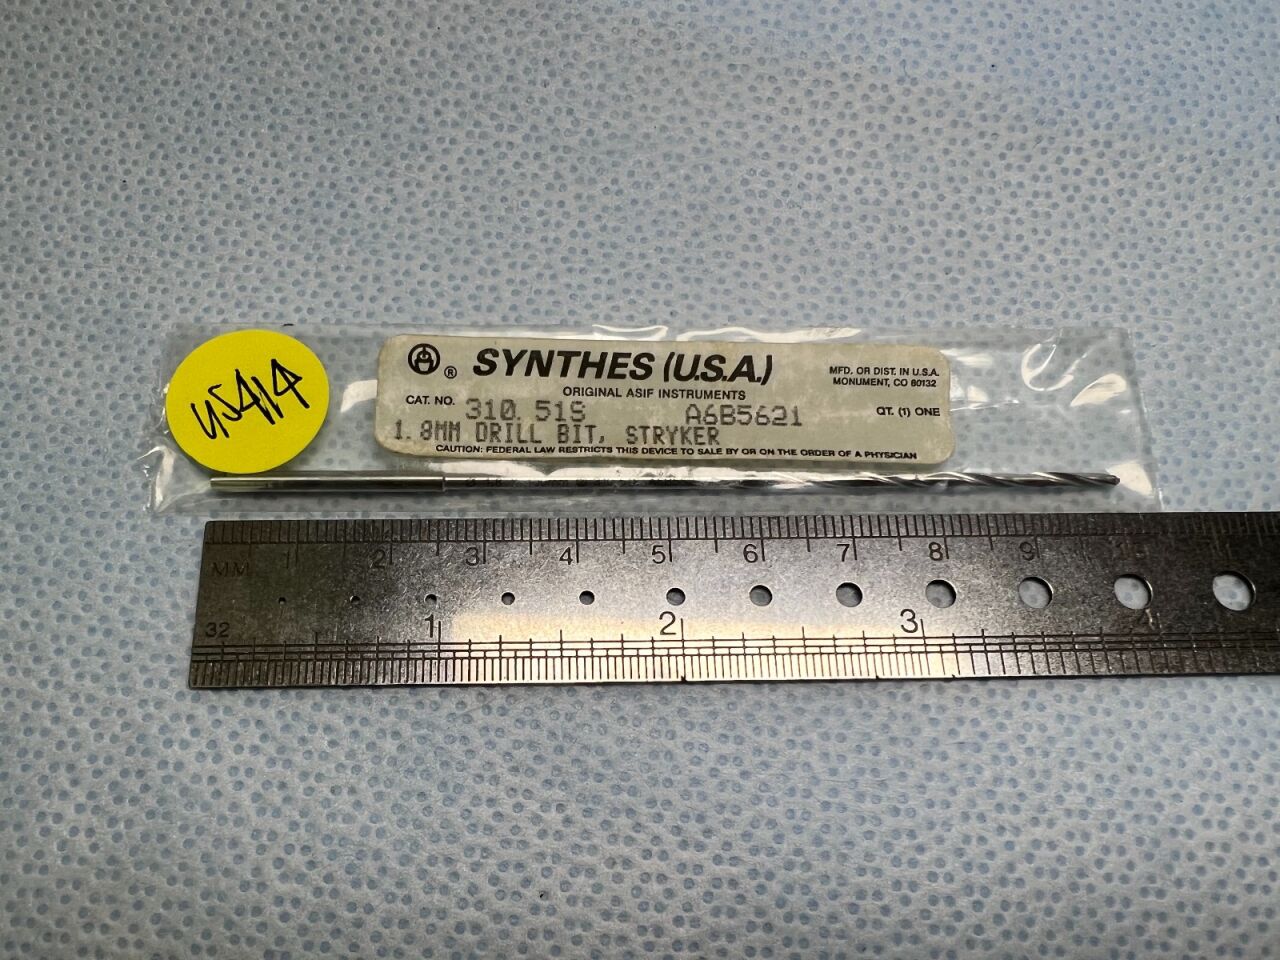 310.51S 1.8mm Drill Bit With Stryker J-Latch US414